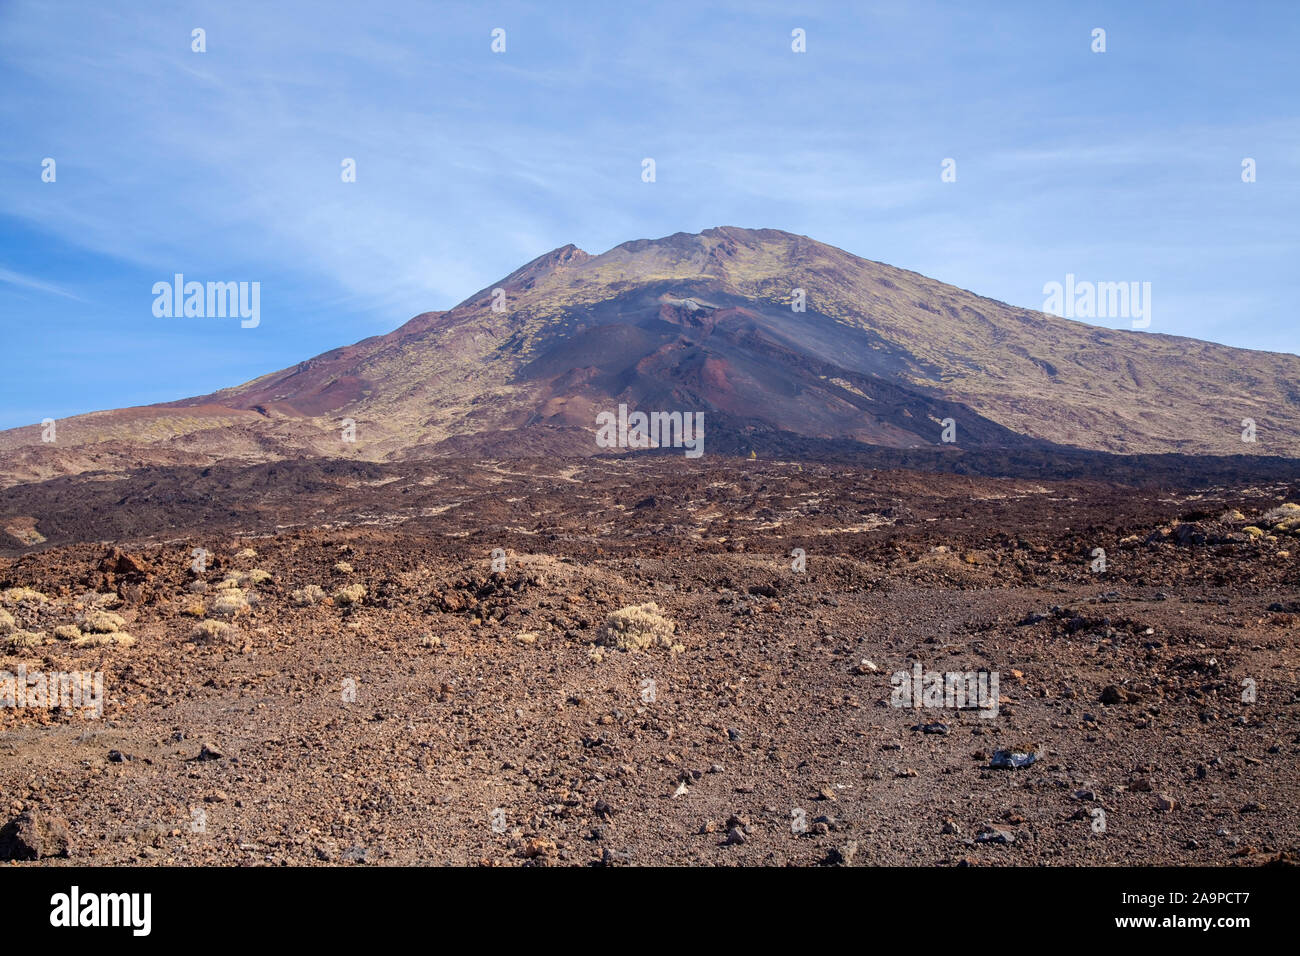 Tenerife, vue en direction de Teide Mirador Narices del Teide vue", en vue d'éléments de preuve de la dernière éruption en 1798 Banque D'Images